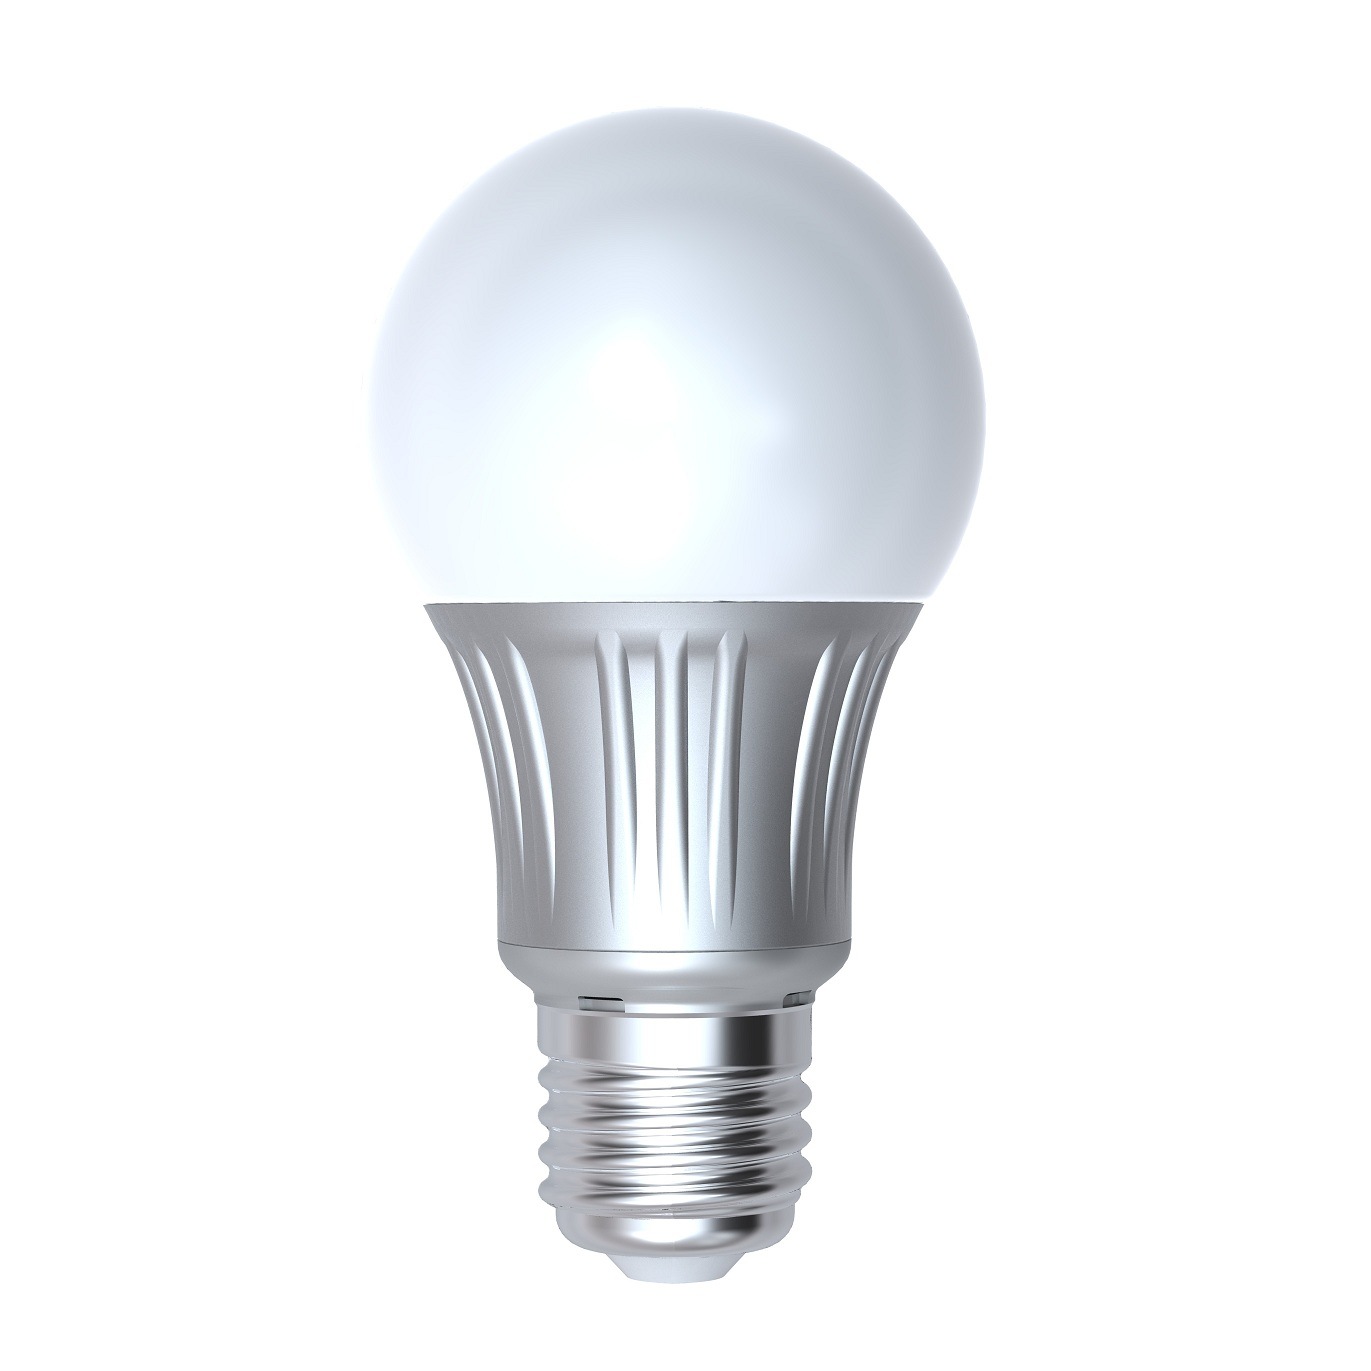 New Design 8W 638lm A60 E27 LED Bulb Light